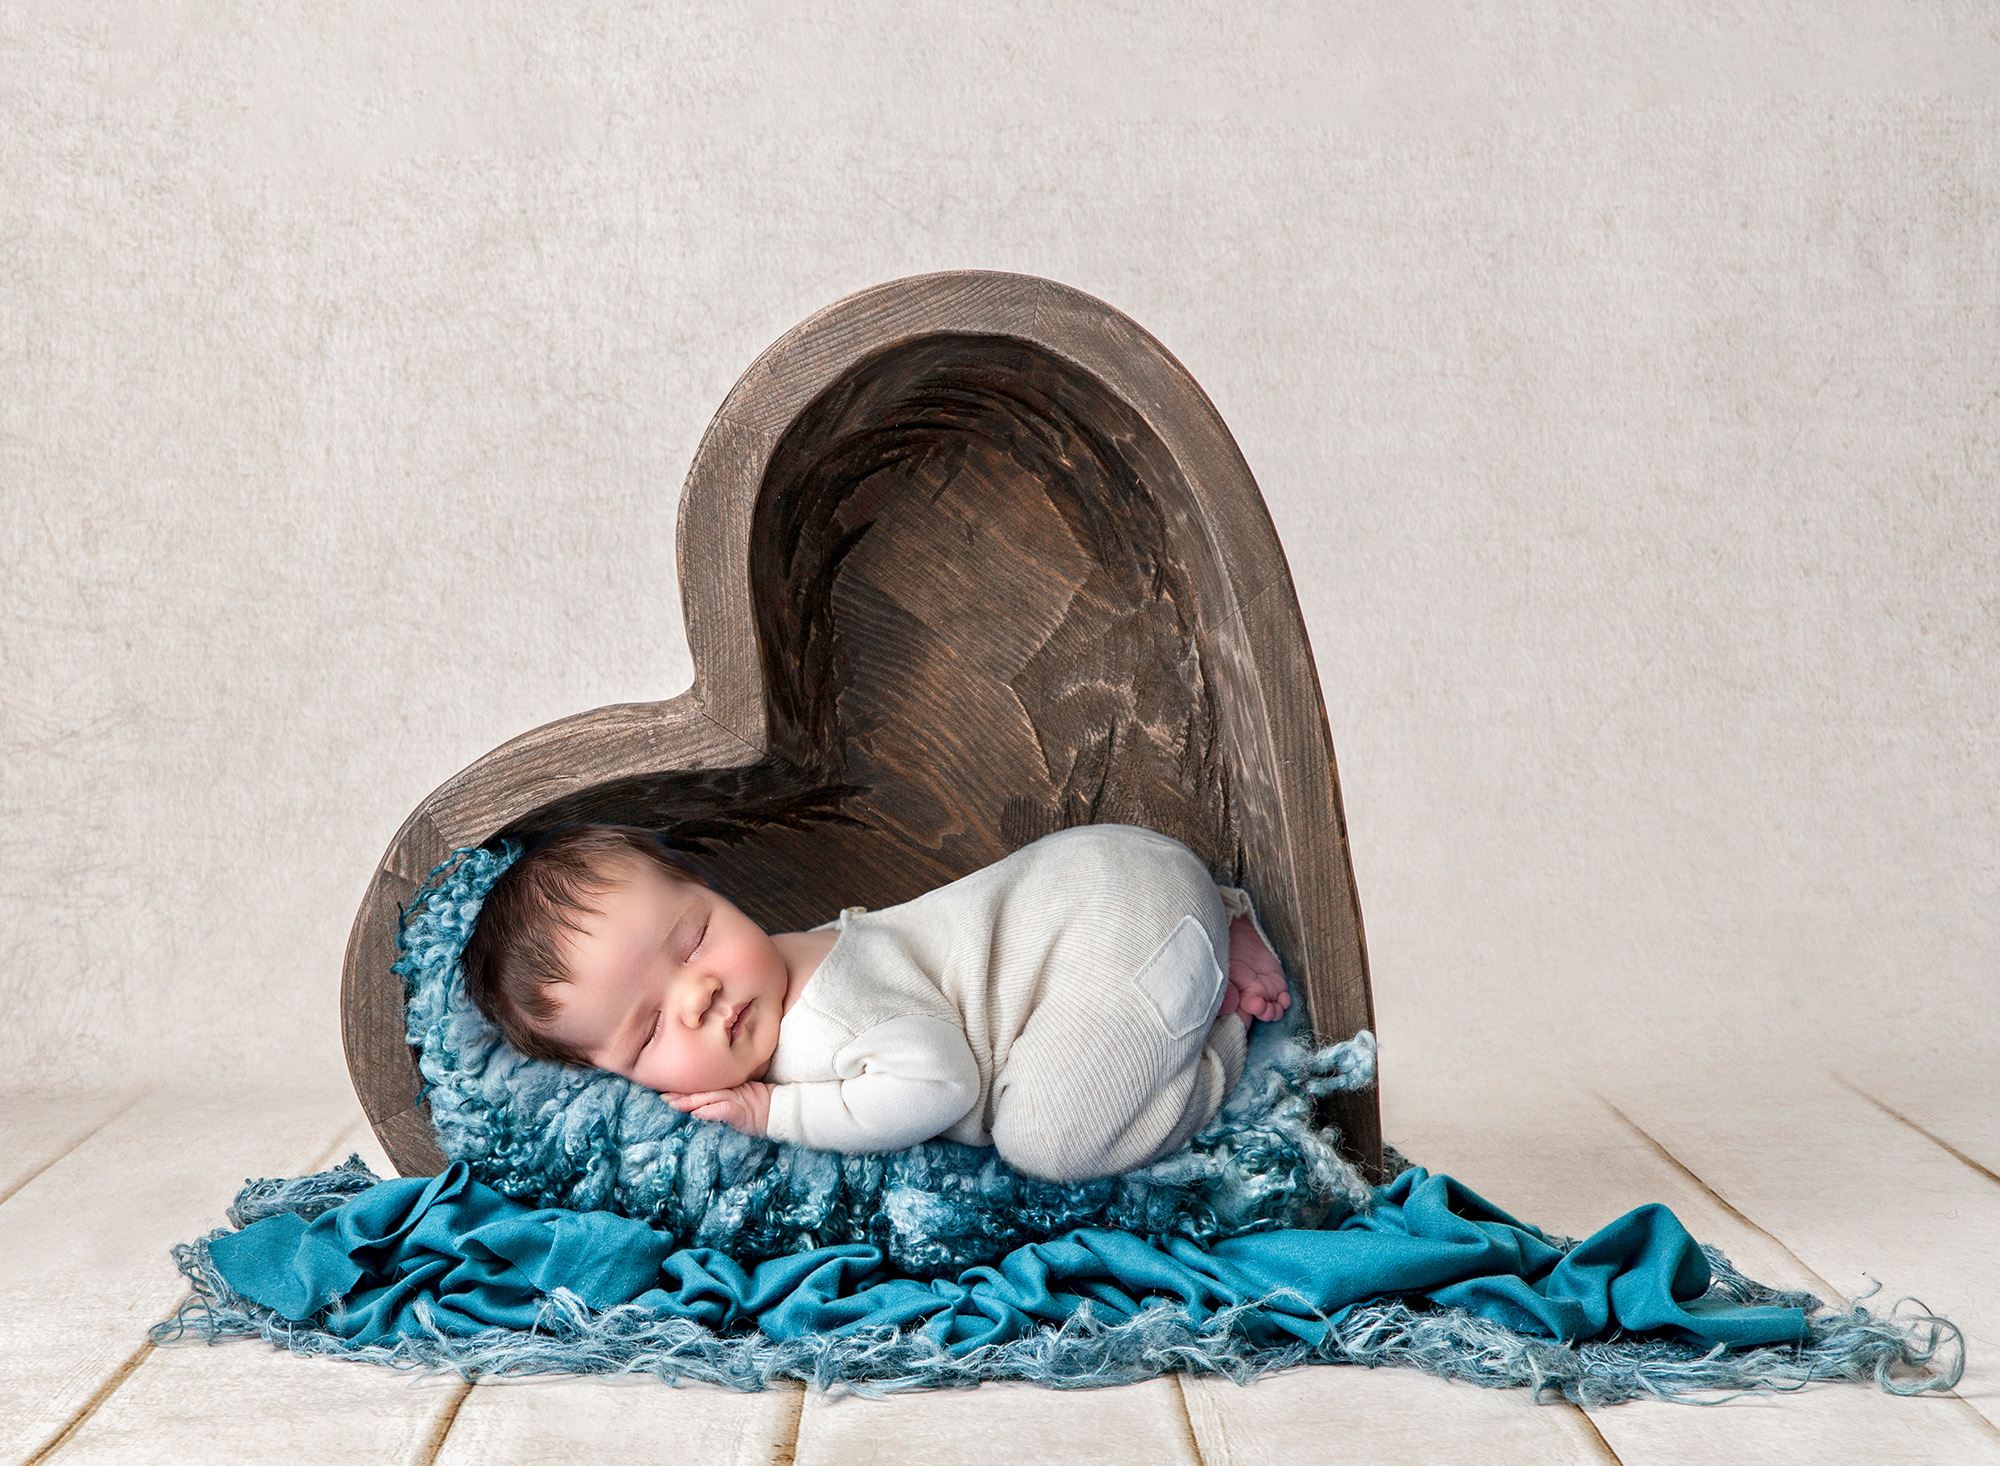 newborn baby boy asleep on blue fluffy blanket inside wooden heart